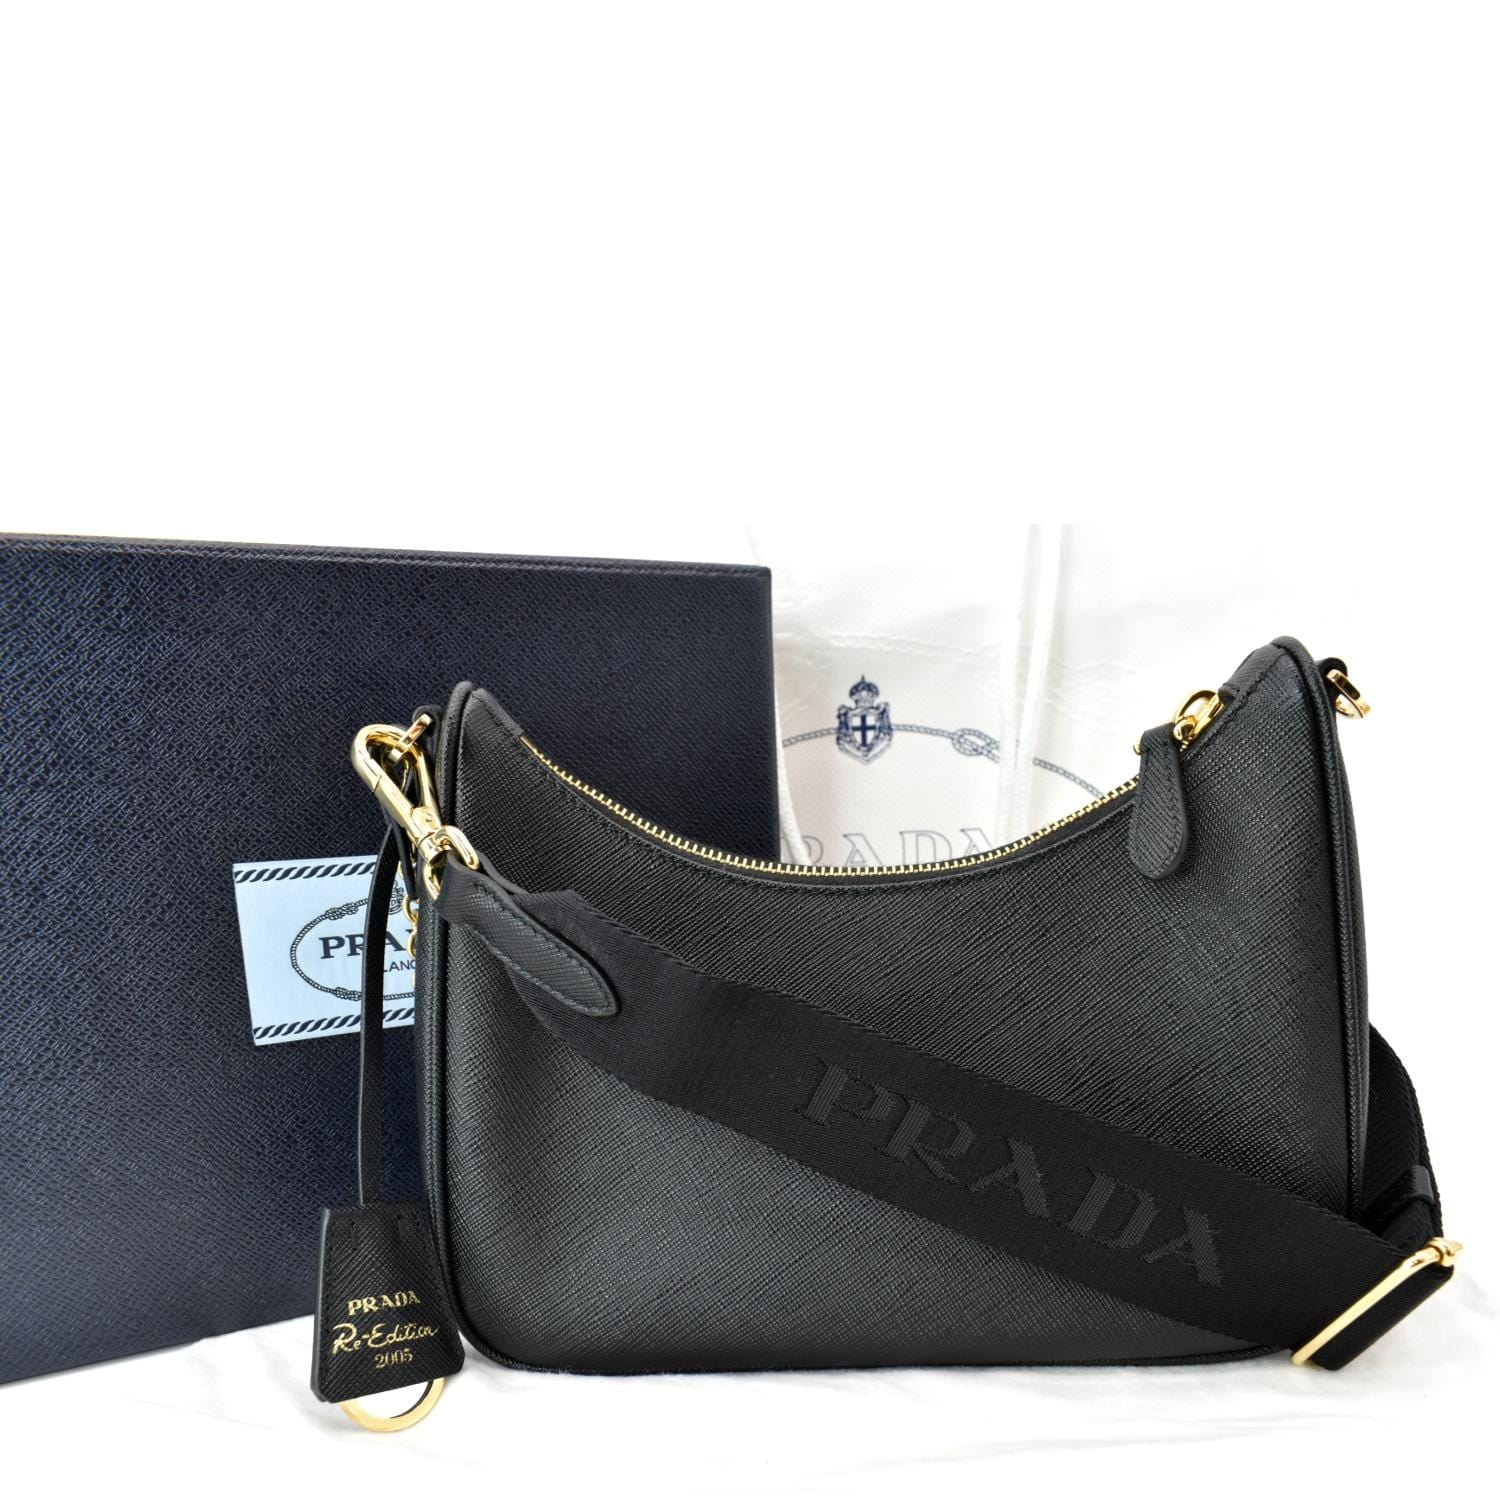 Prada Re-Edition 2005 Shoulder Bag Saffiano Leather Small Black